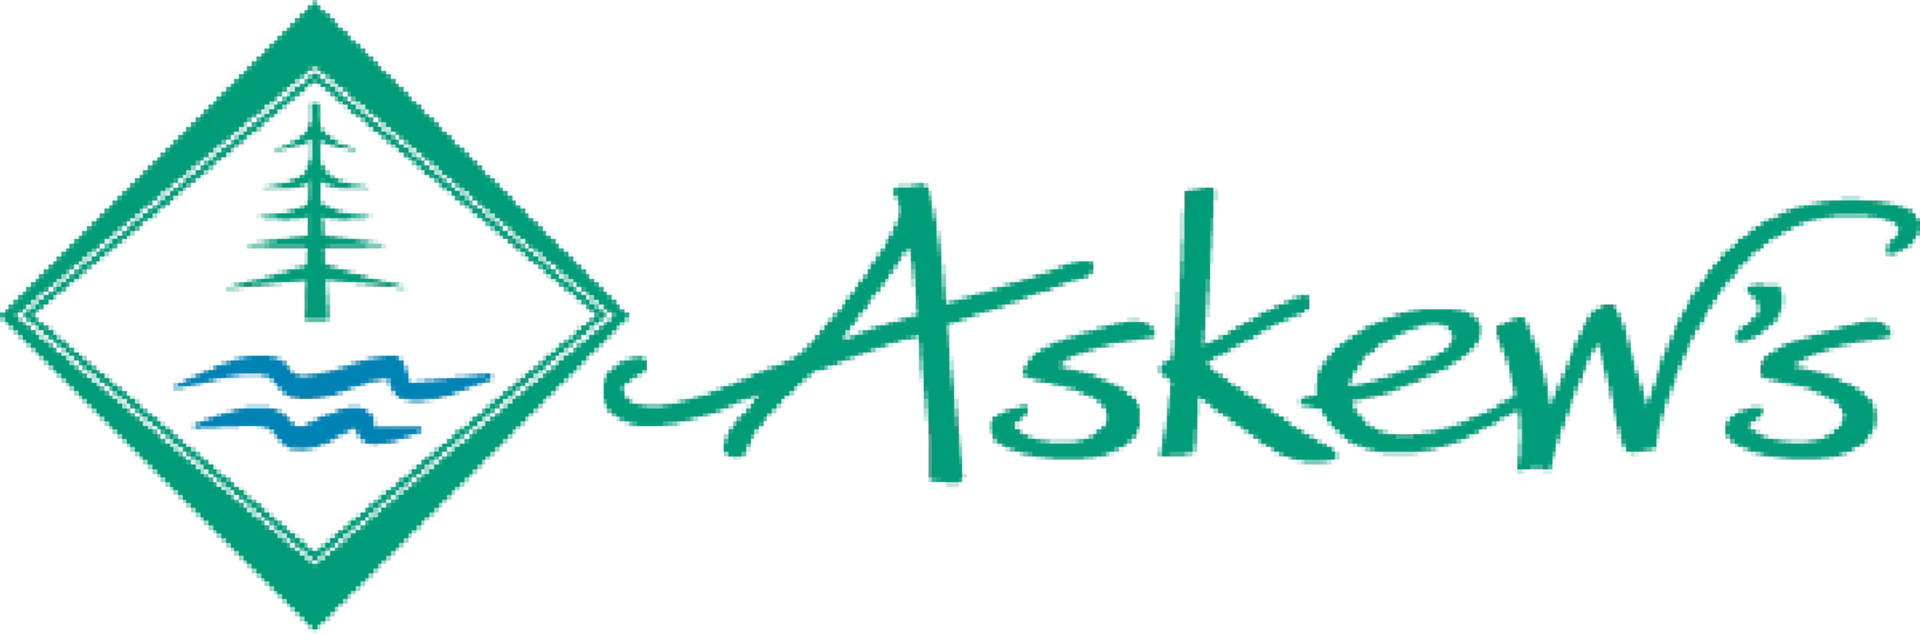 ASKEWS FOODS logo